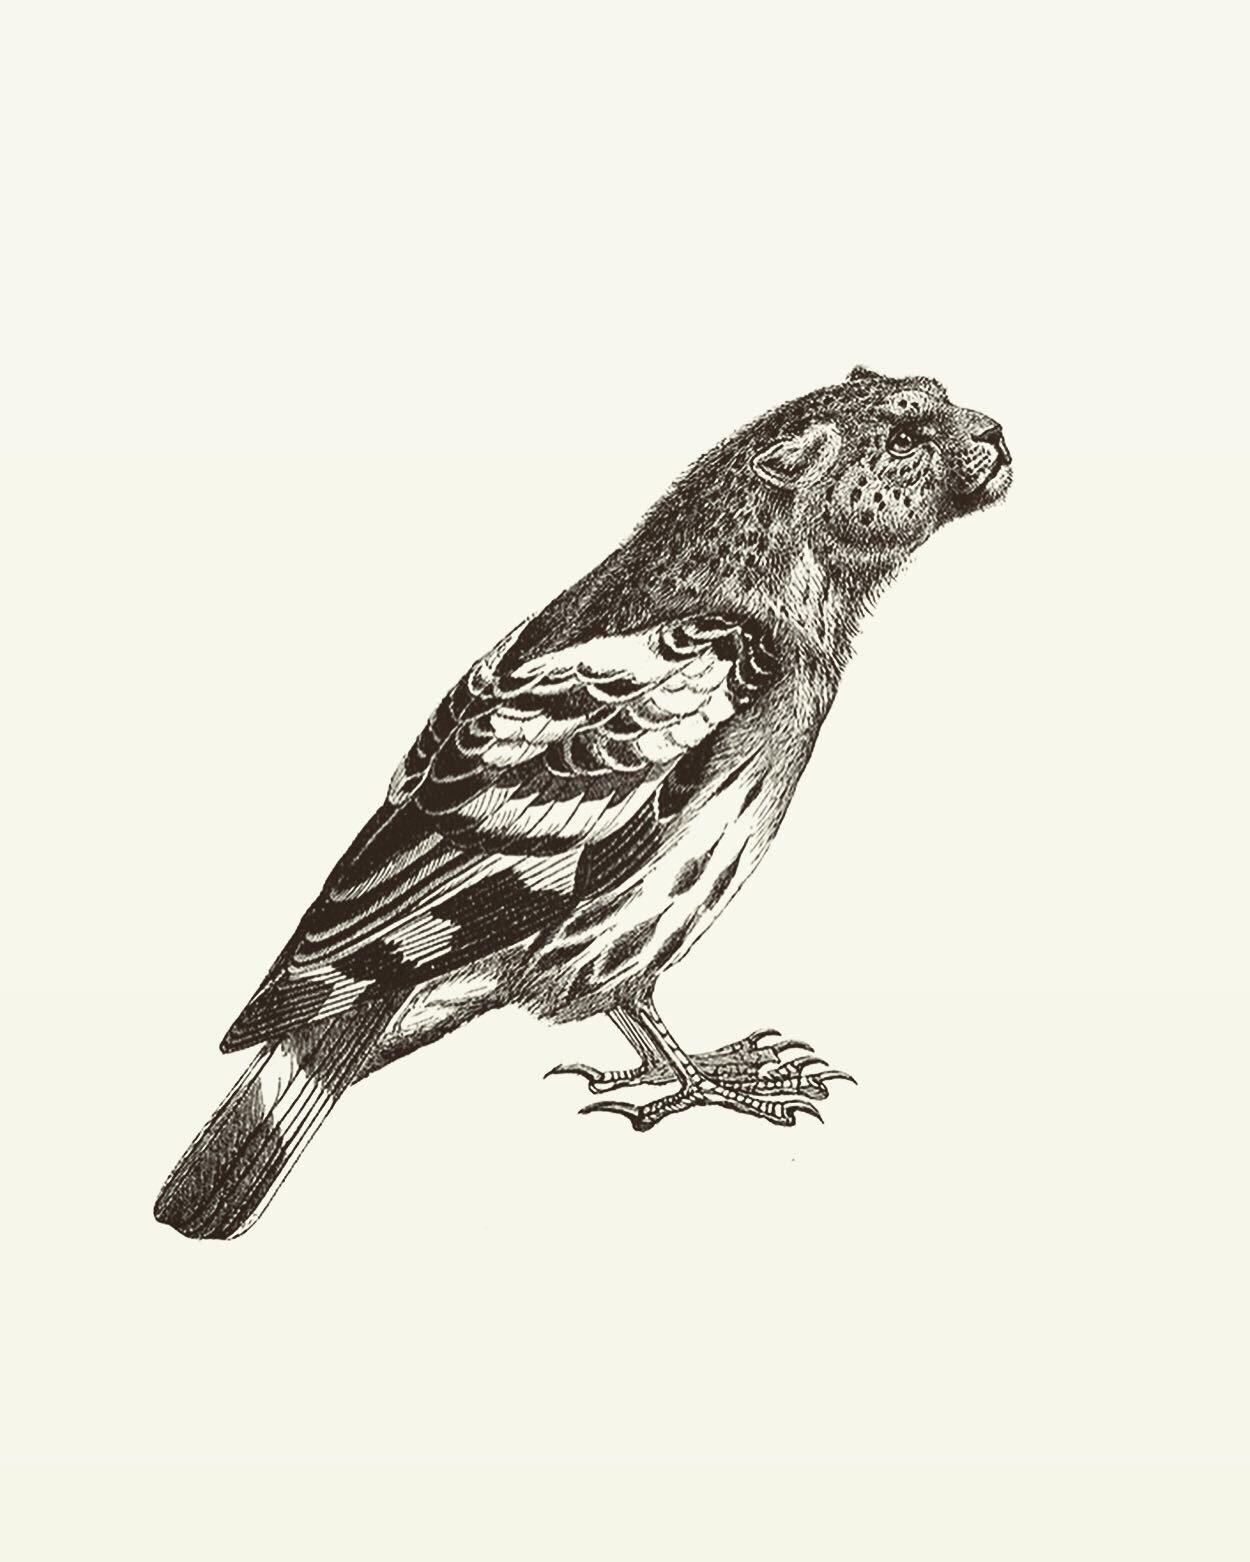 Animal Illustrations wood engraving, leopard, sparrow